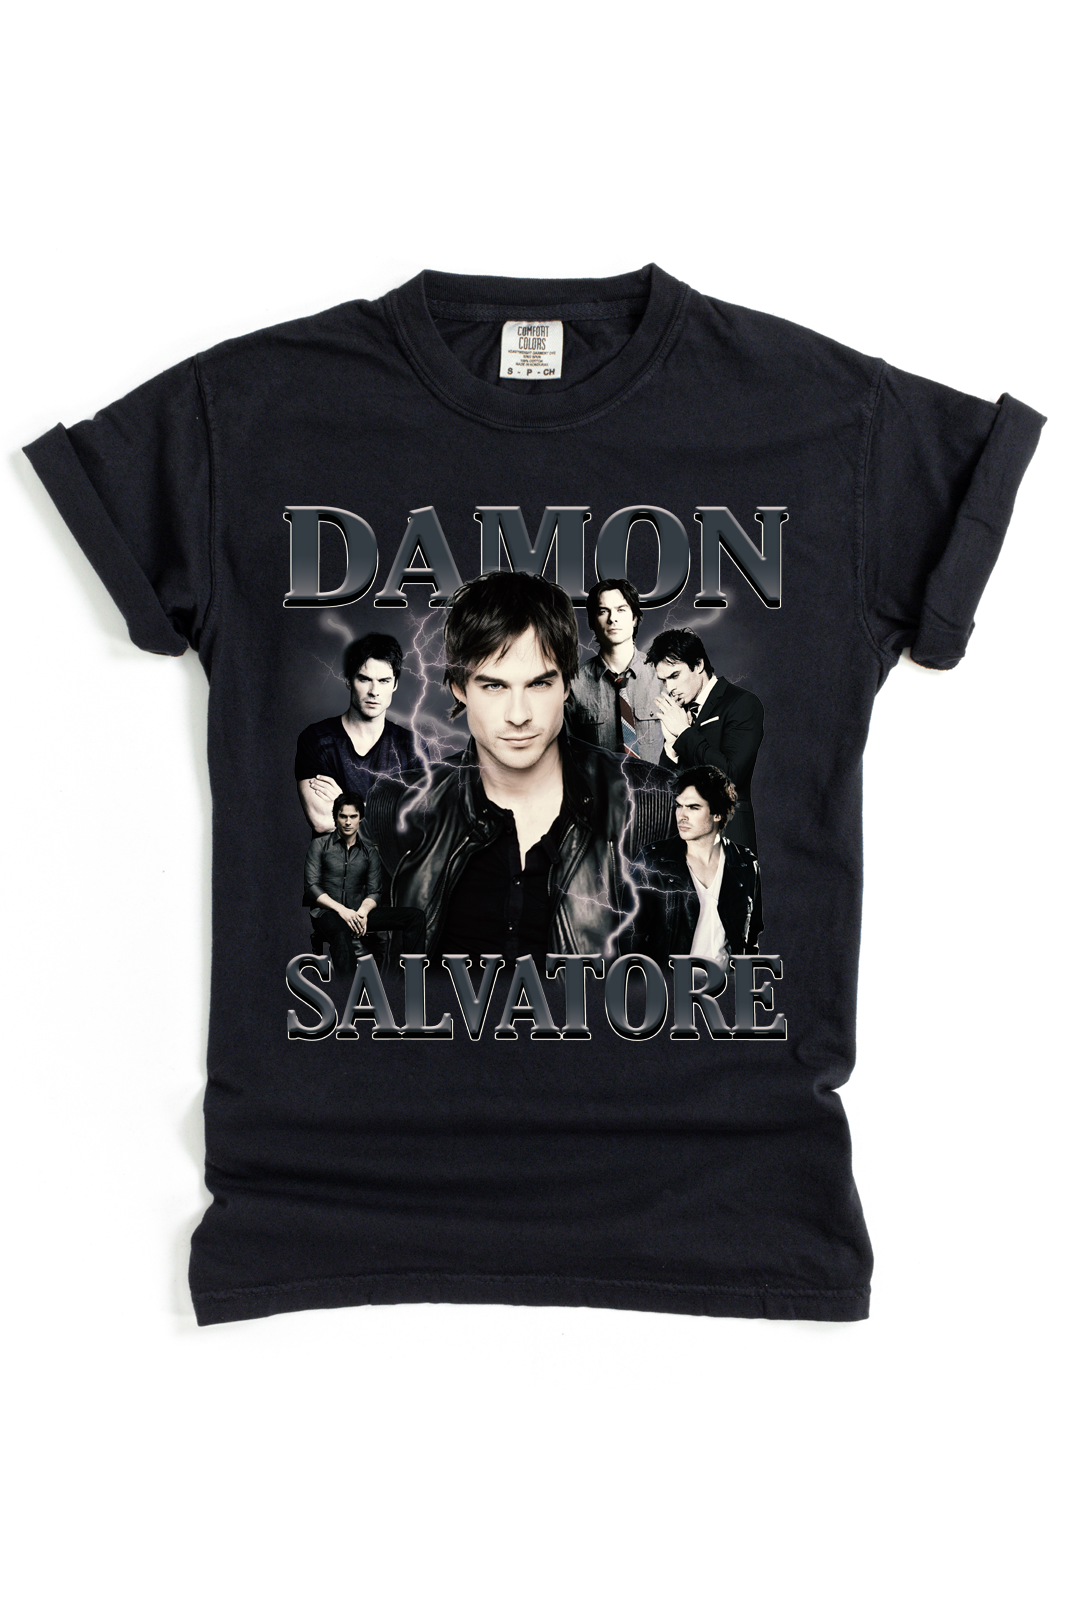 Damon Salvatore Tee/Sweatshirt